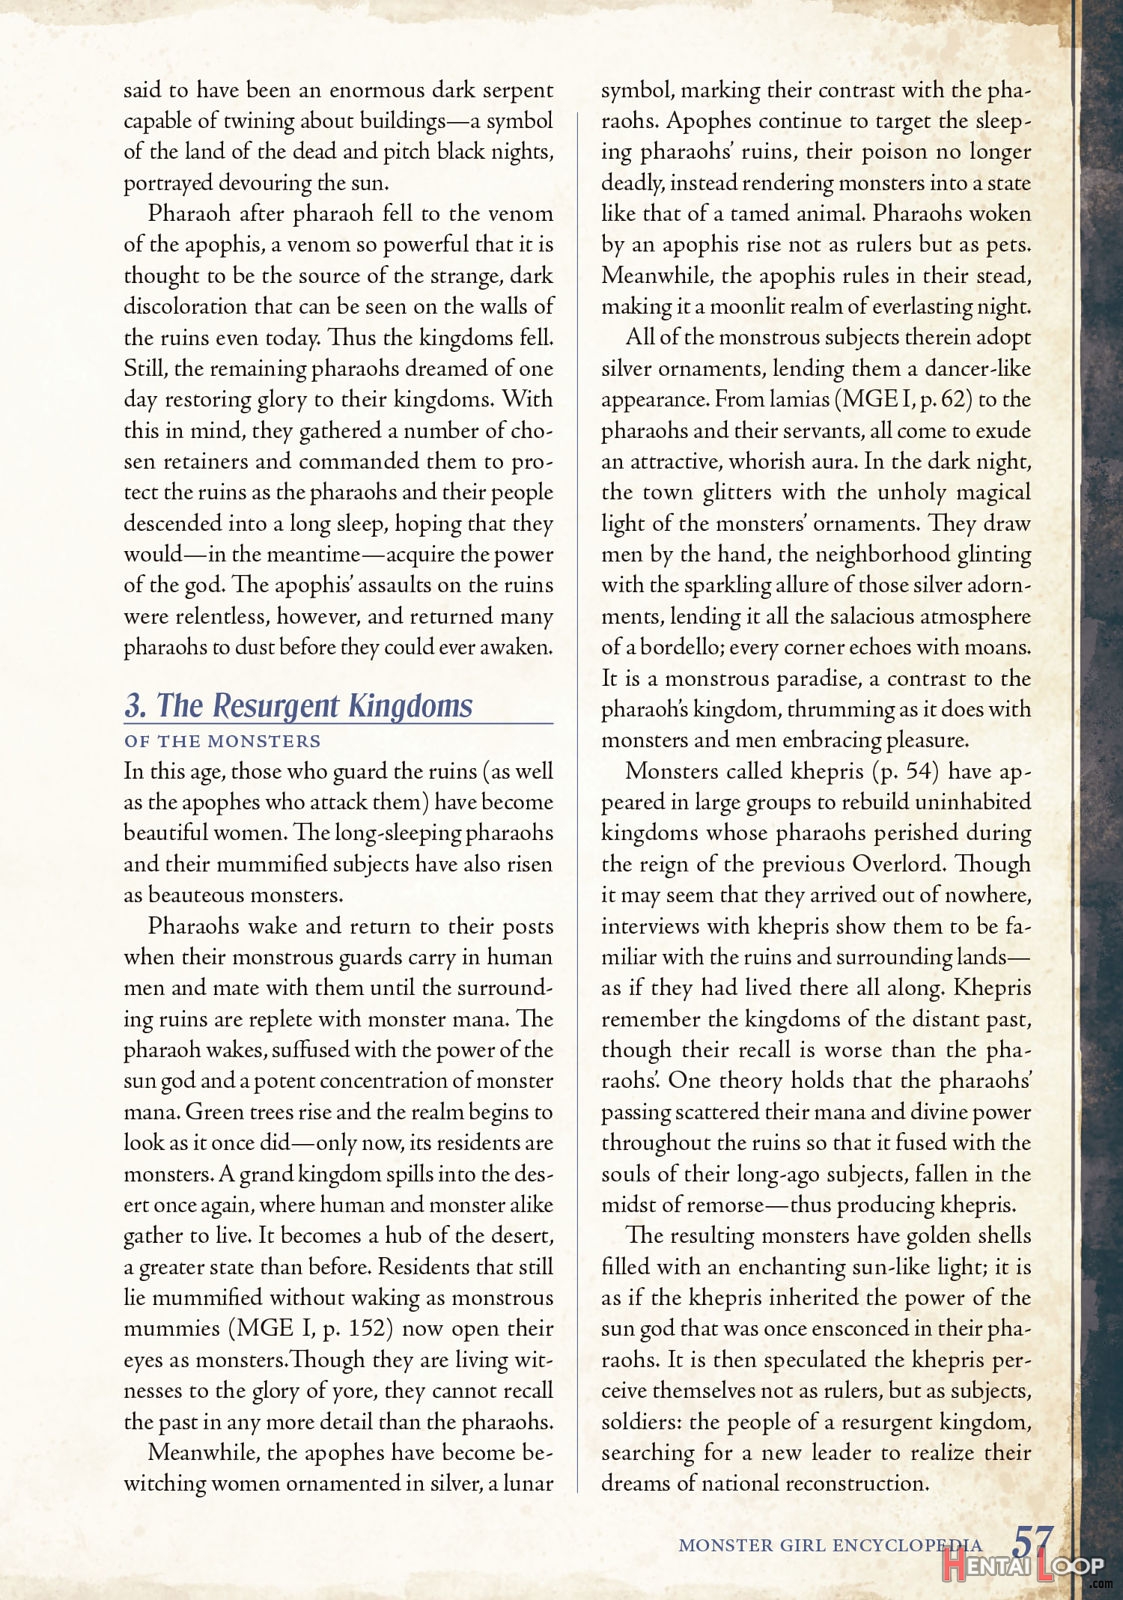 Monster Girl Encyclopedia Vol. 2 page 58